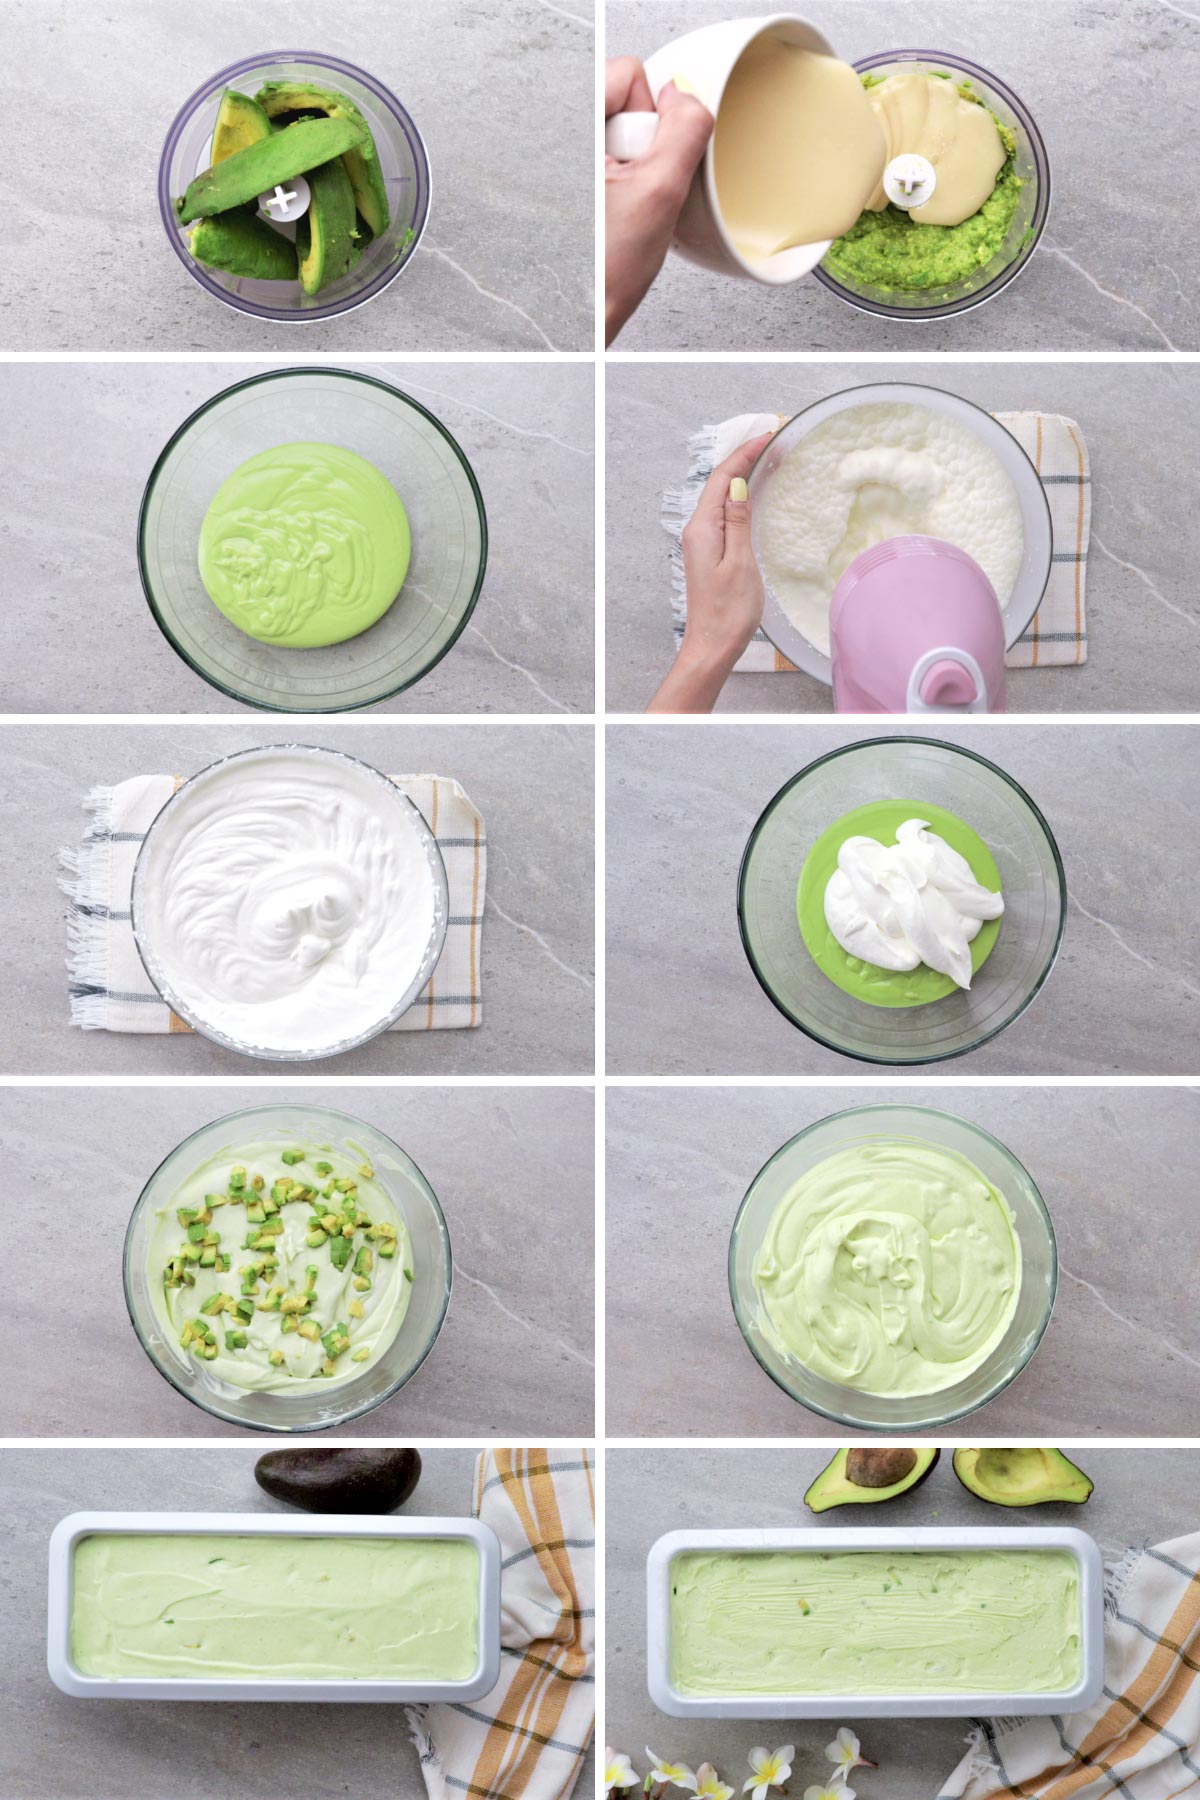 Steps on how to make Avocado Ice Cream.